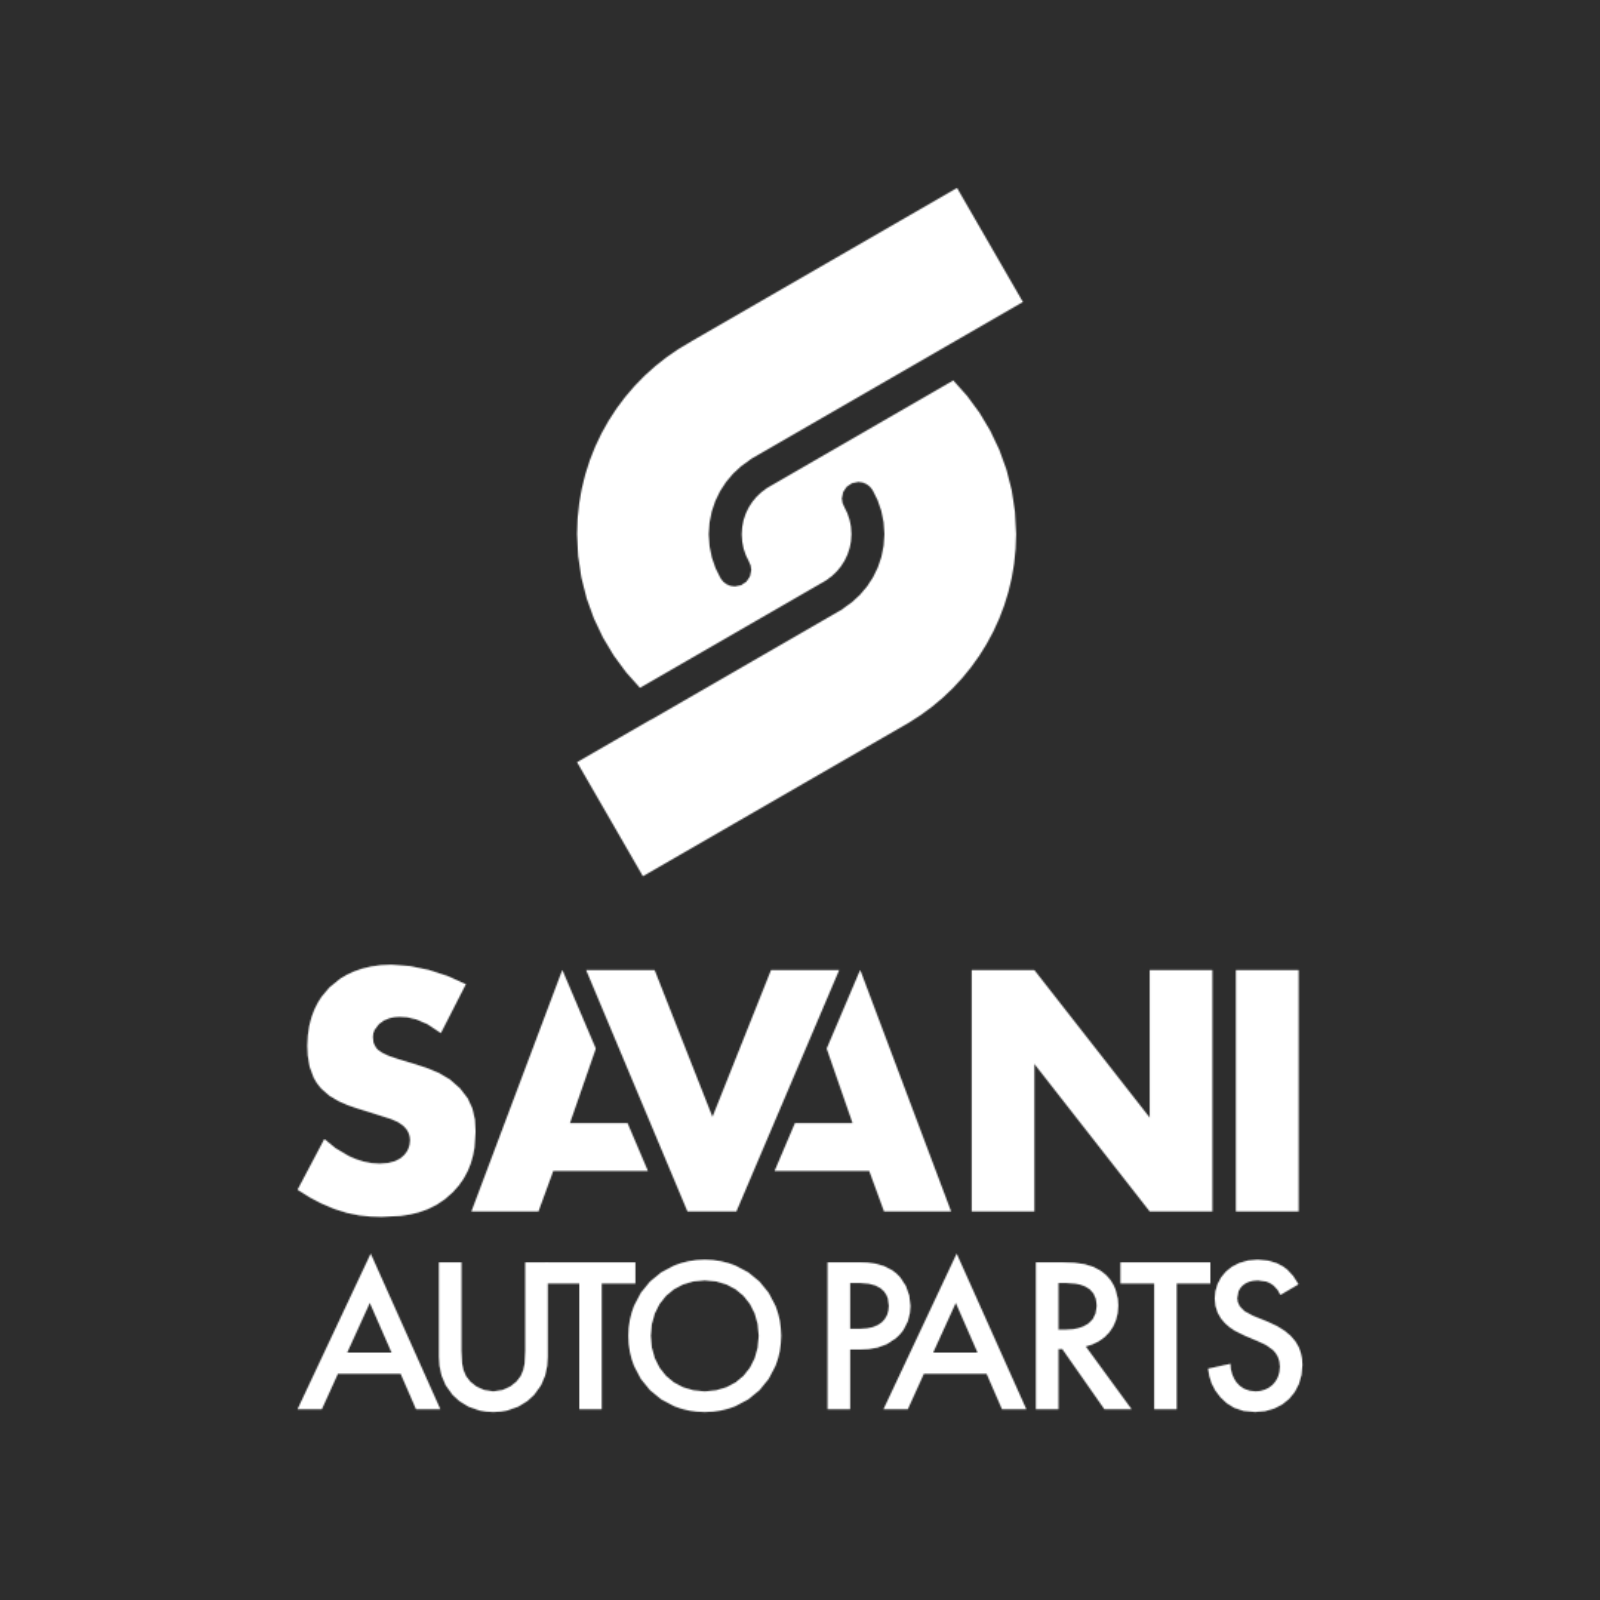 The logo mark and type logo for Savani Auto Parts